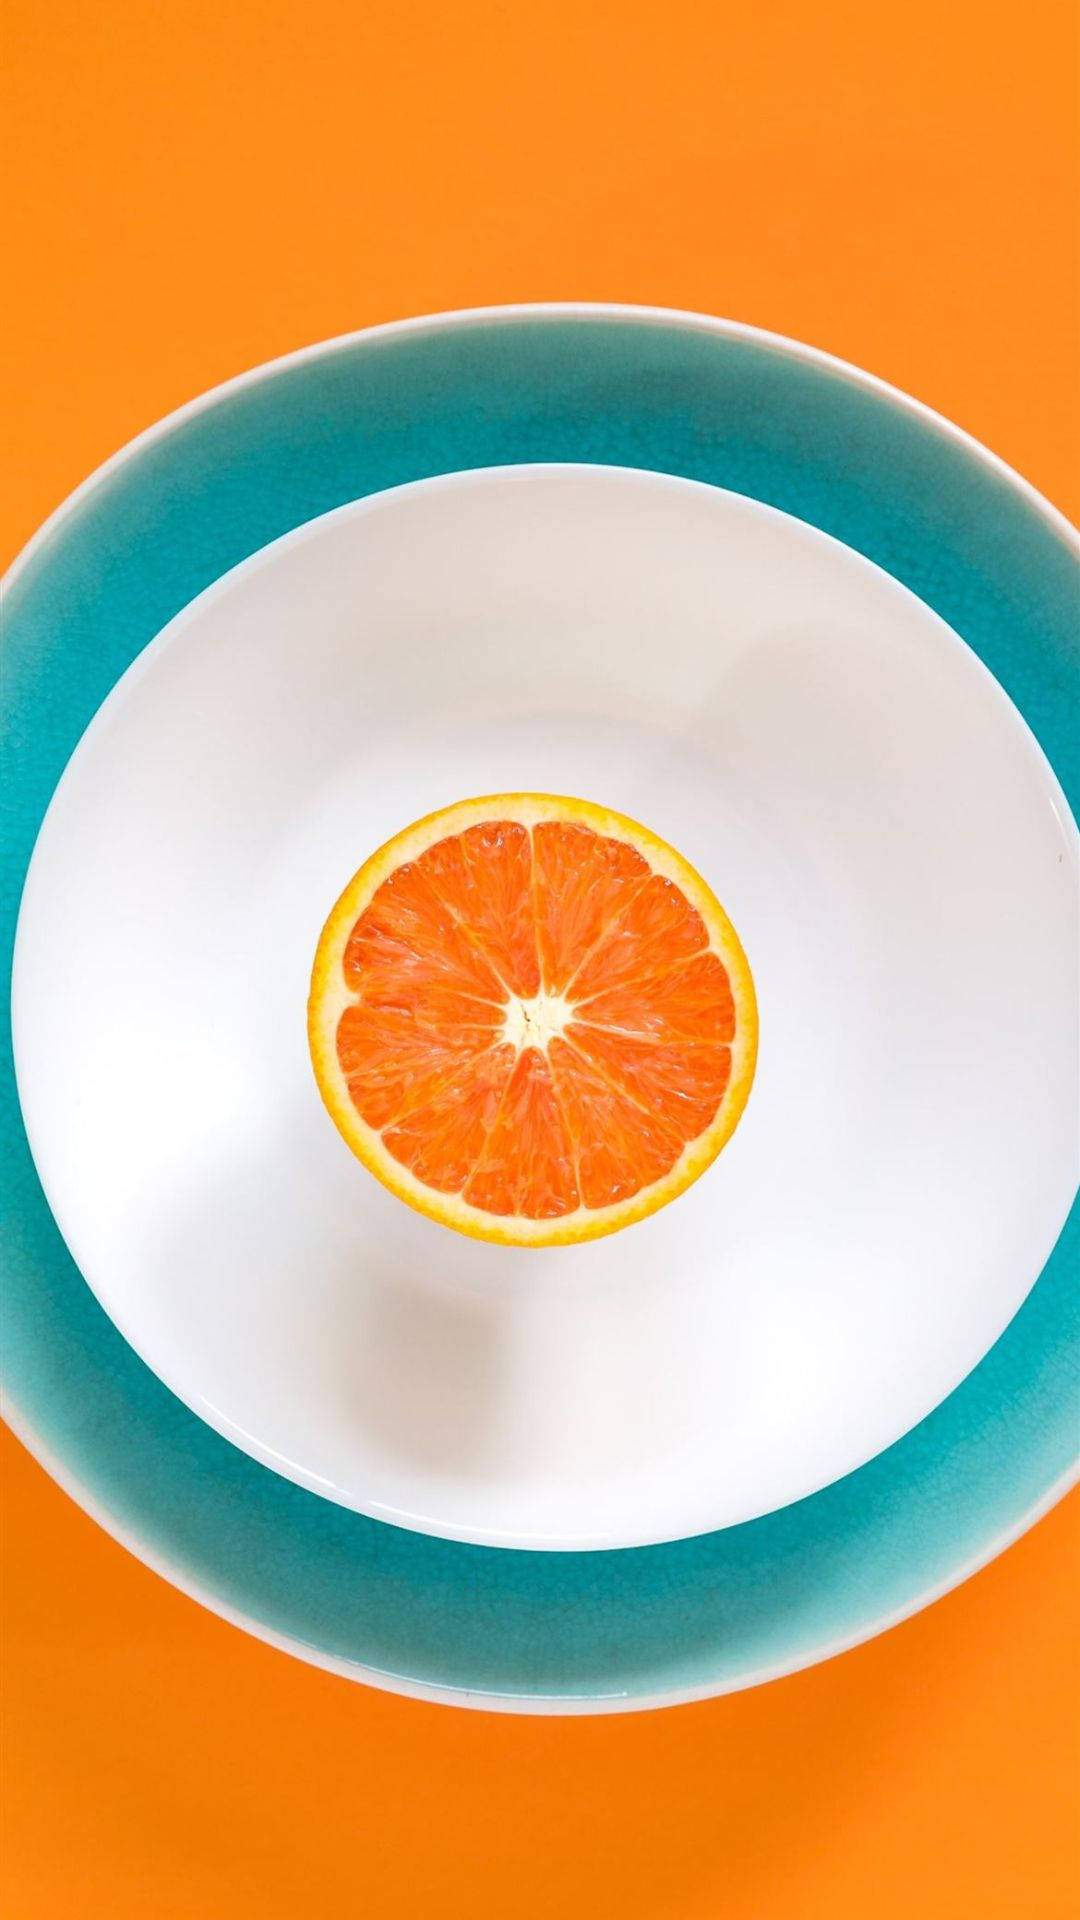 Sliced Orange Fruit On Plate Background